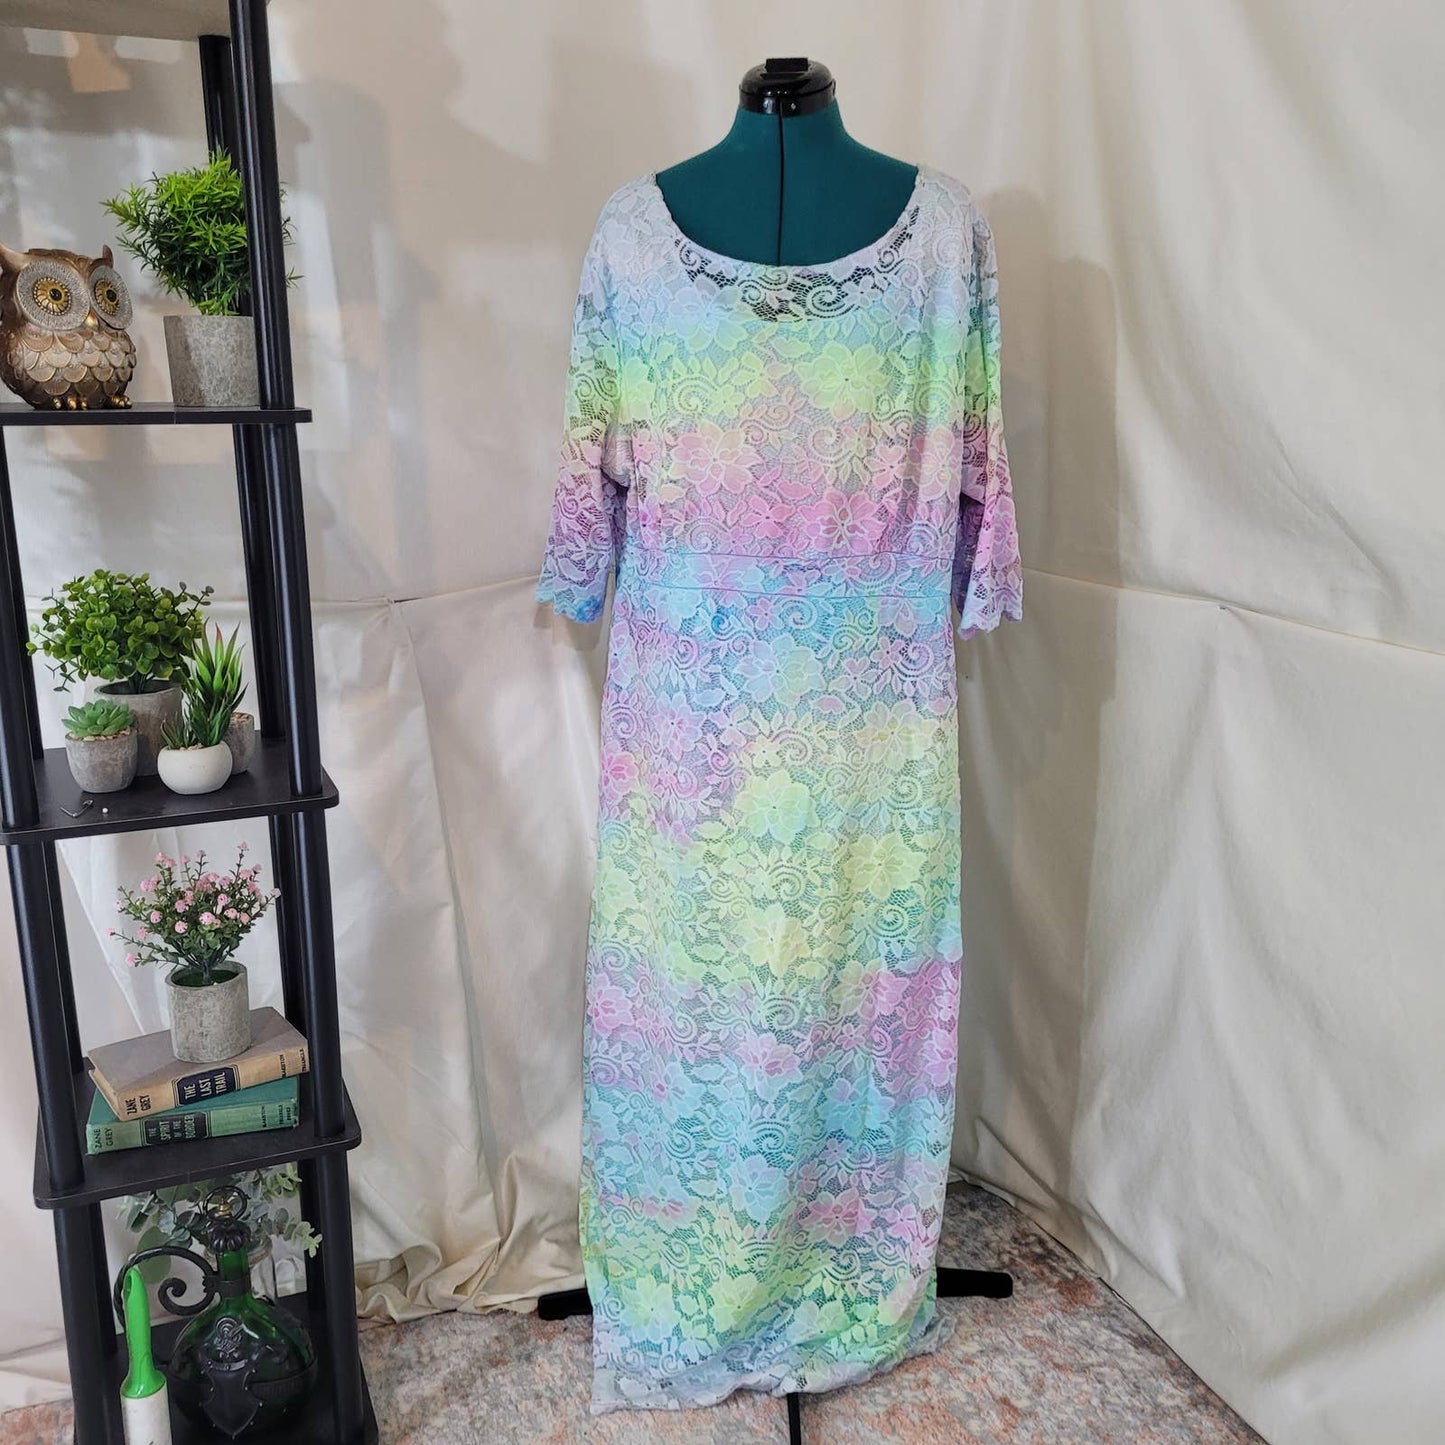 Lace Pastel Rainbow Maxi Dress - Size 4XLMarkita's ClosetUnbranded